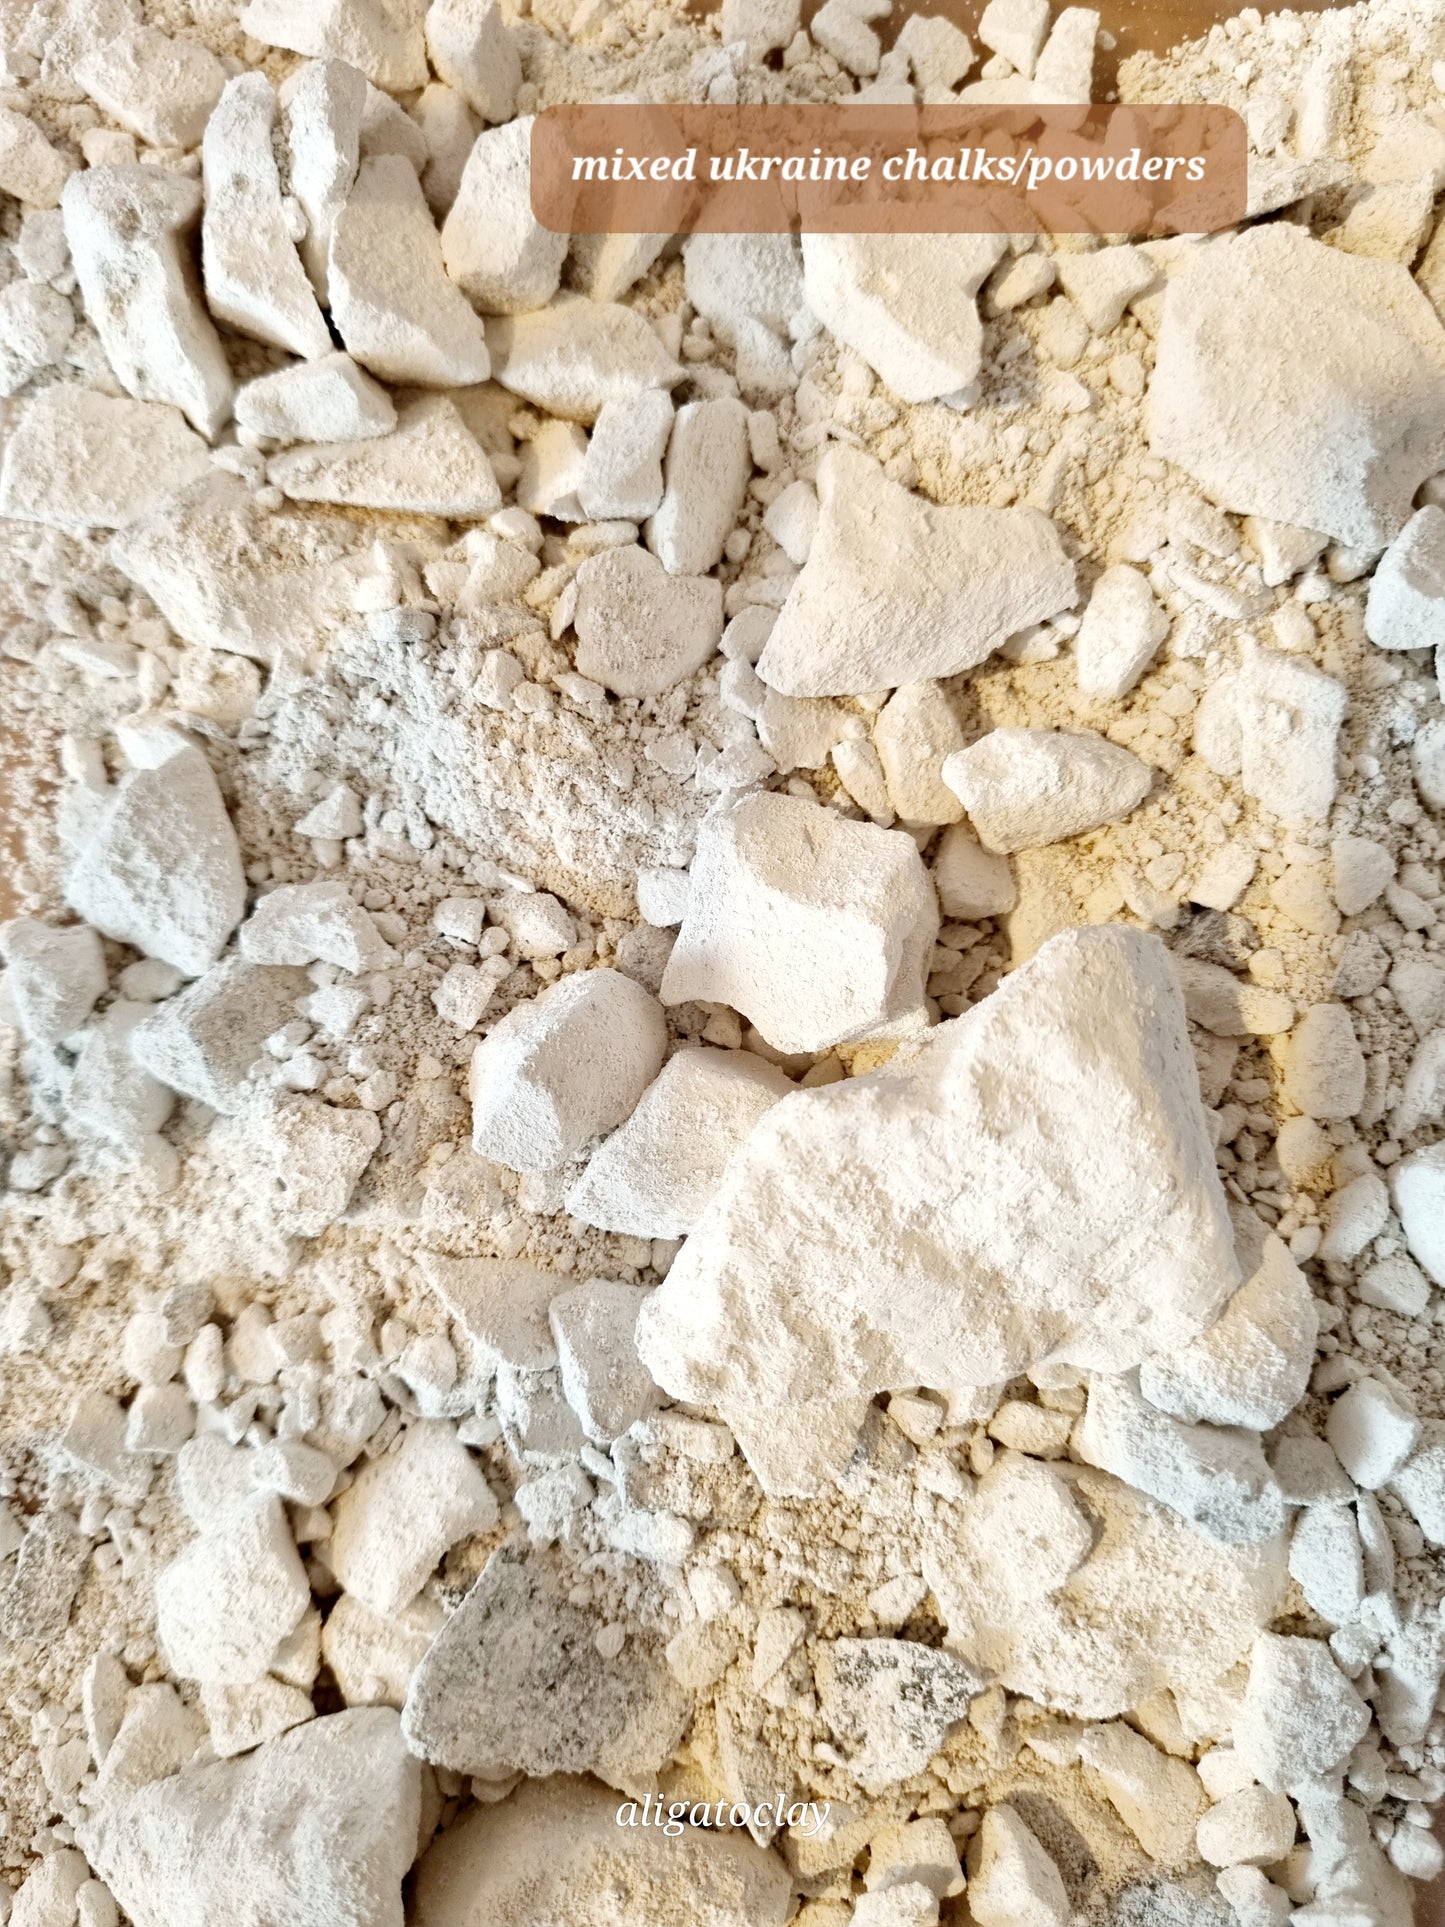 Mixed Edible Natural Ukraine Chalk Powders